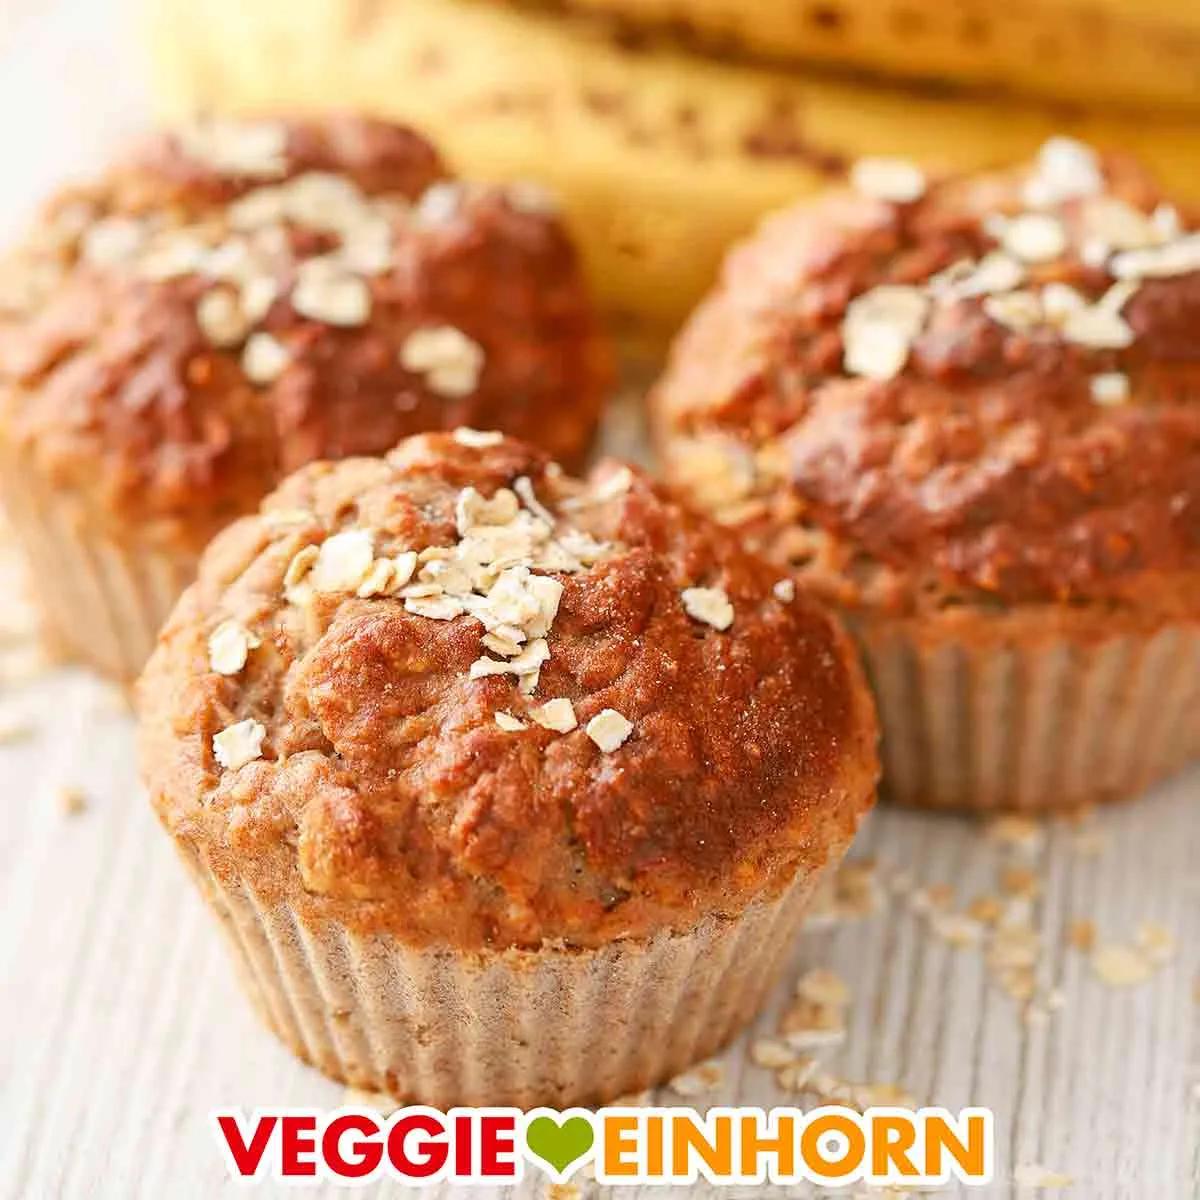 Vegane Haferflocken Bananen Muffins Rezept Bananen Muffins Vegane | My ...